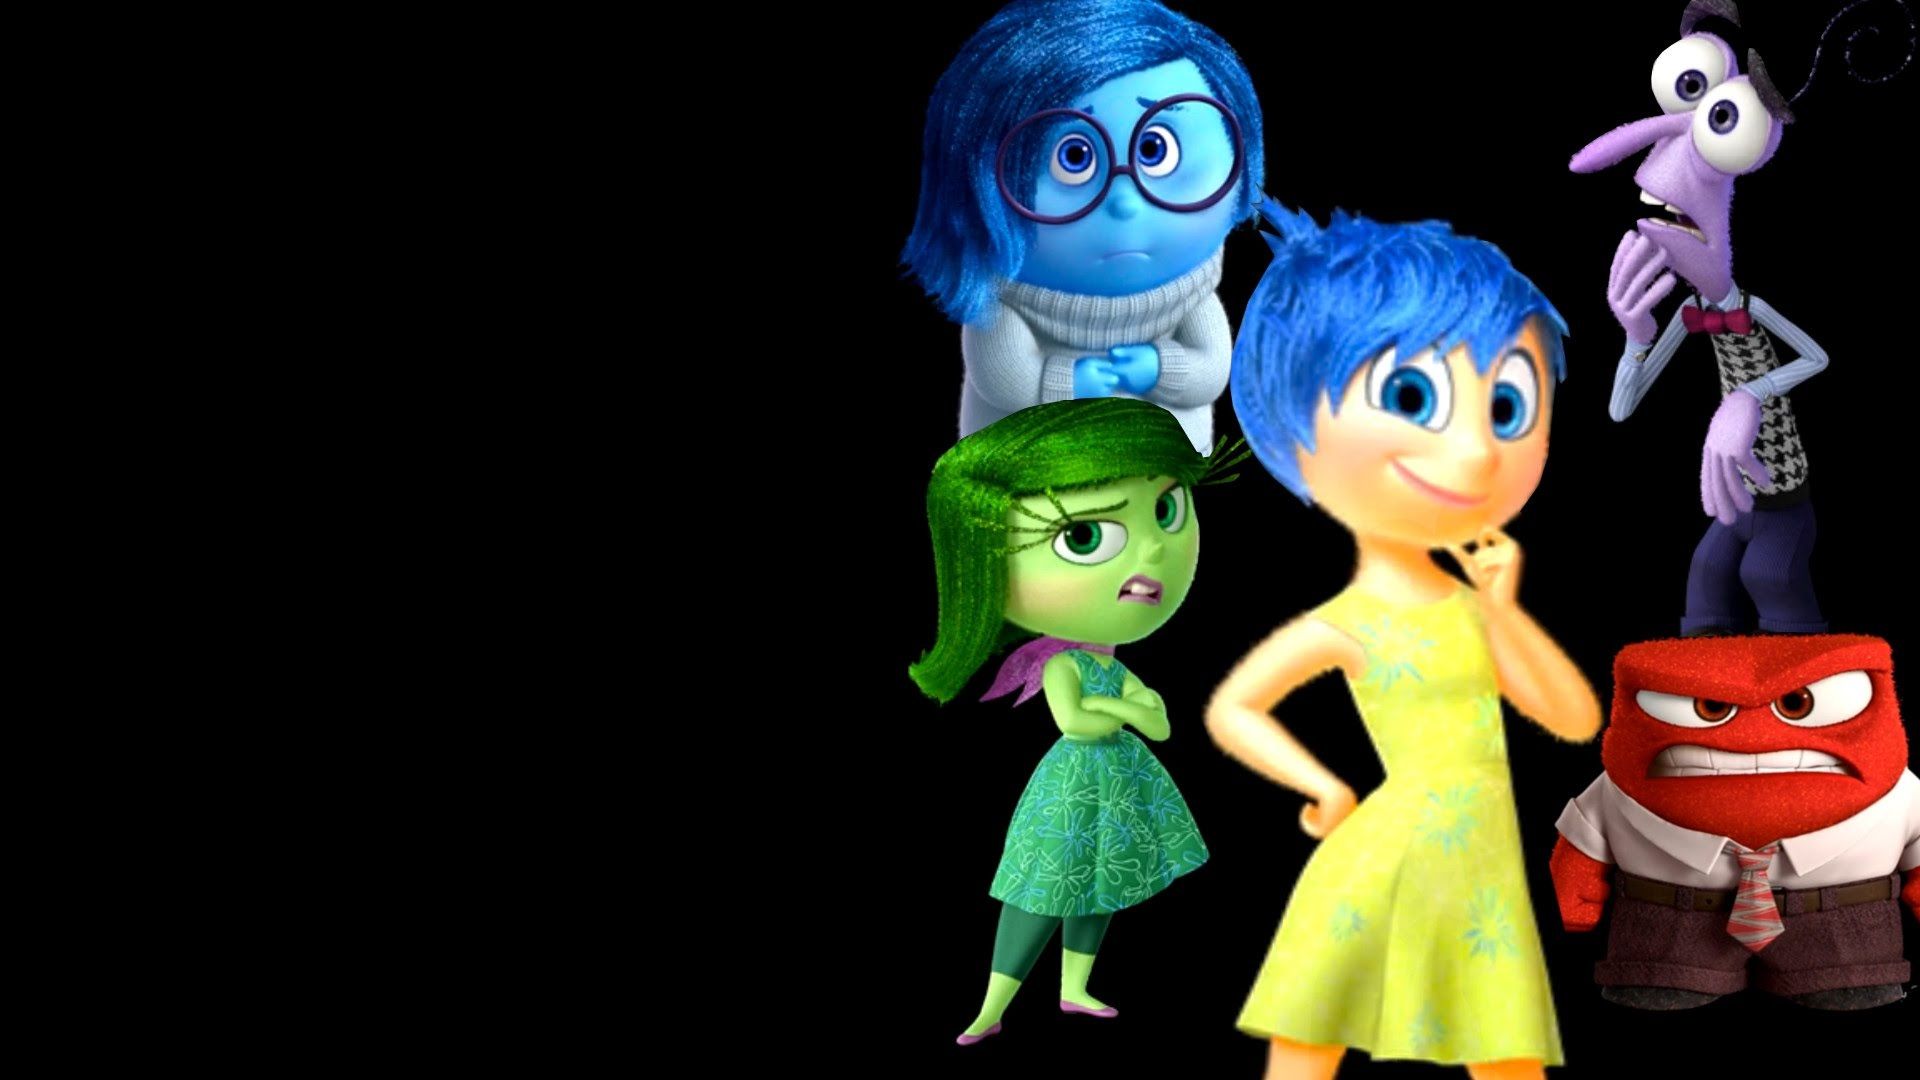 At Cinemas: Pixar’s latest Perisher pleaser is here